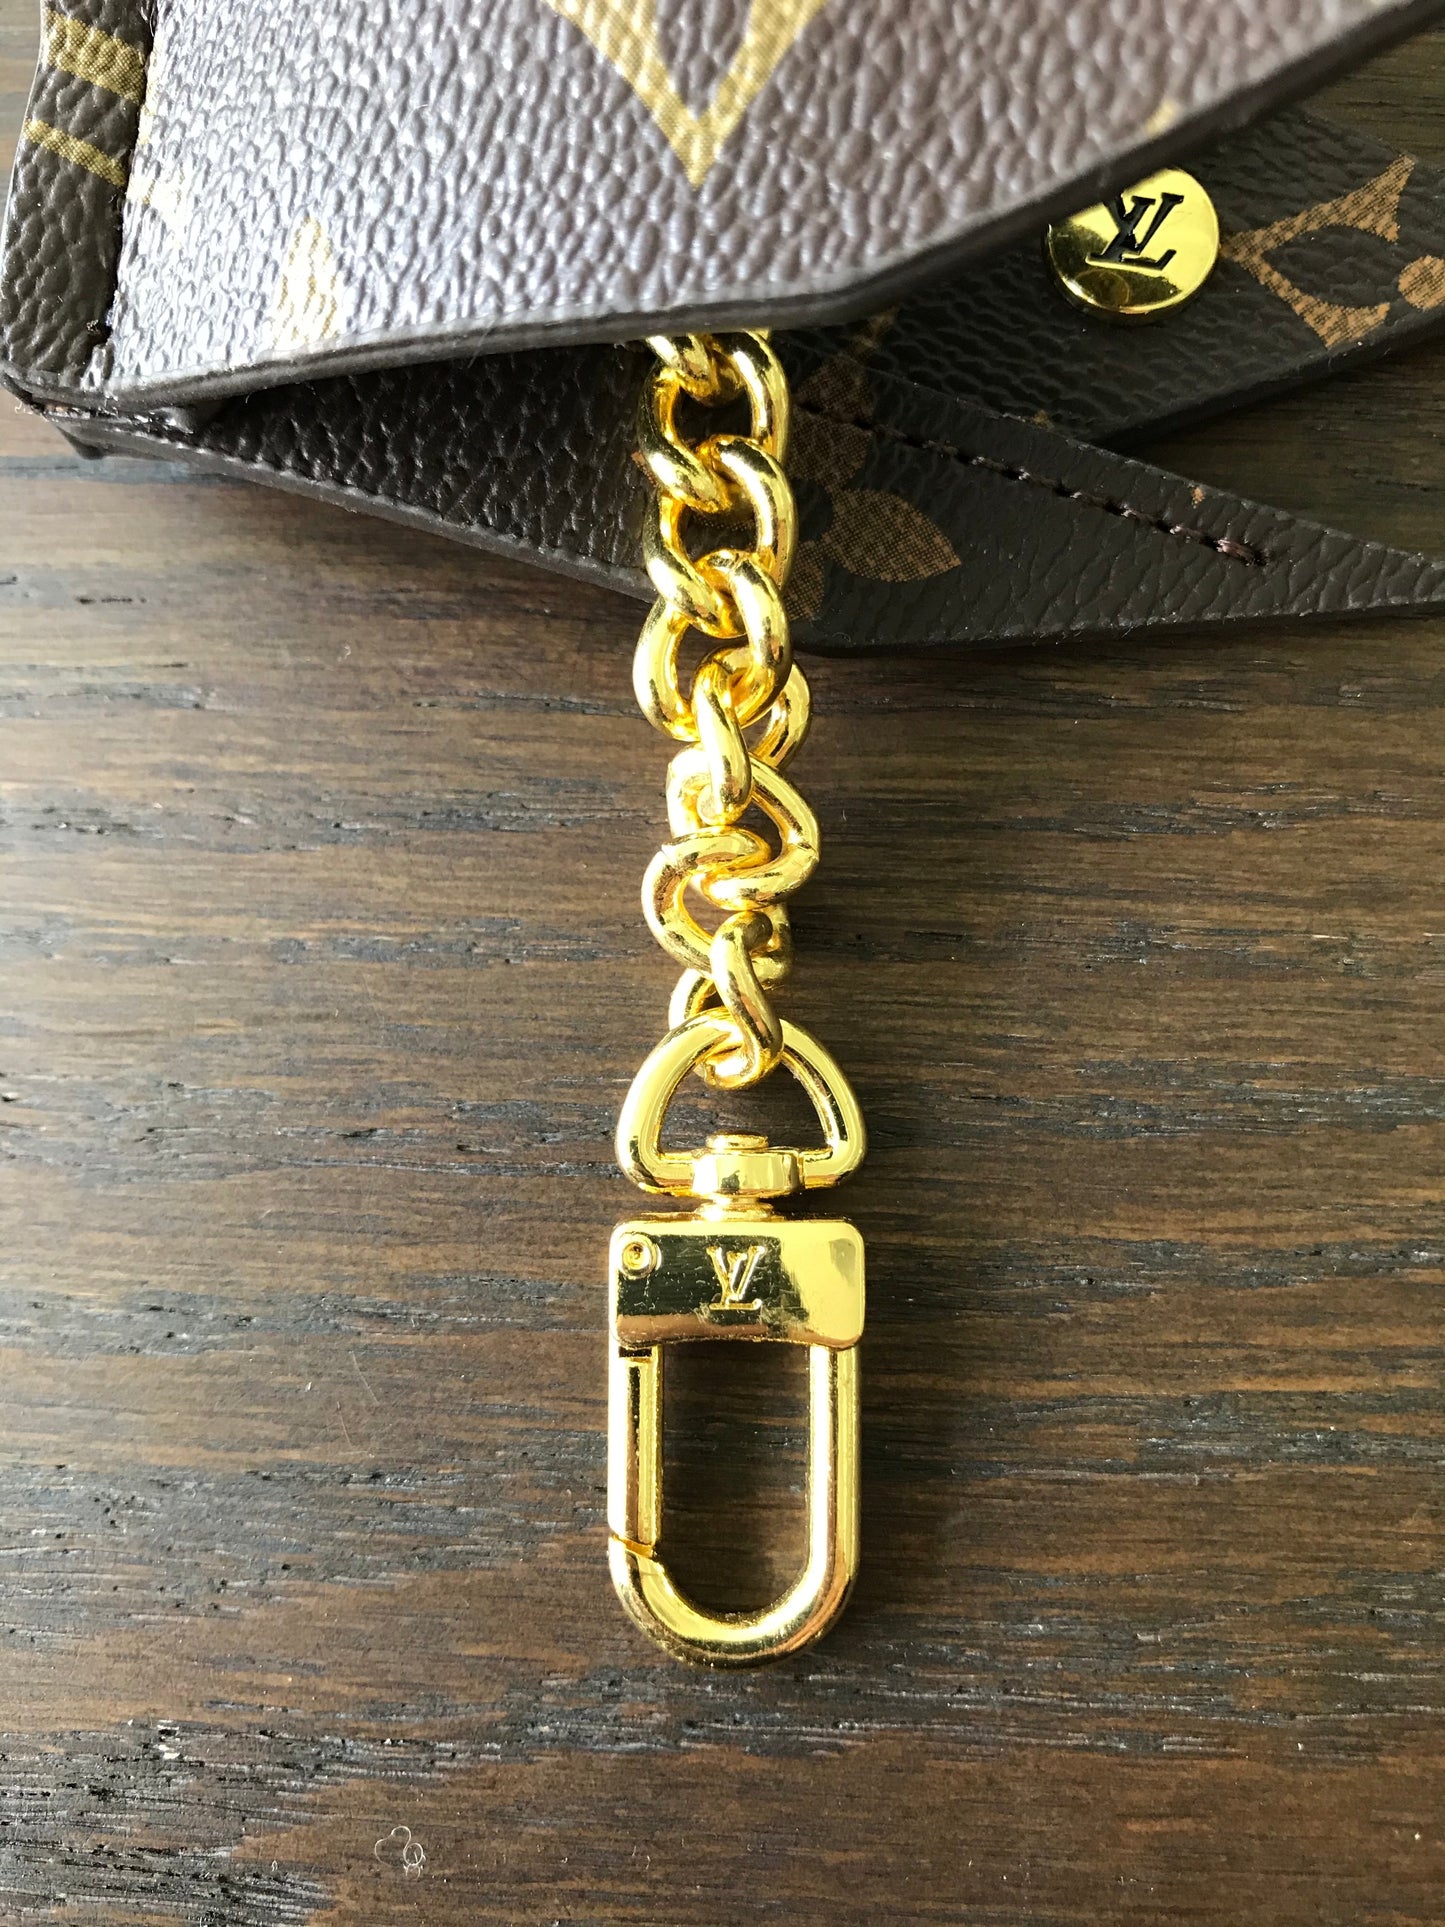 Trending LV Leather Crane Bag Charm